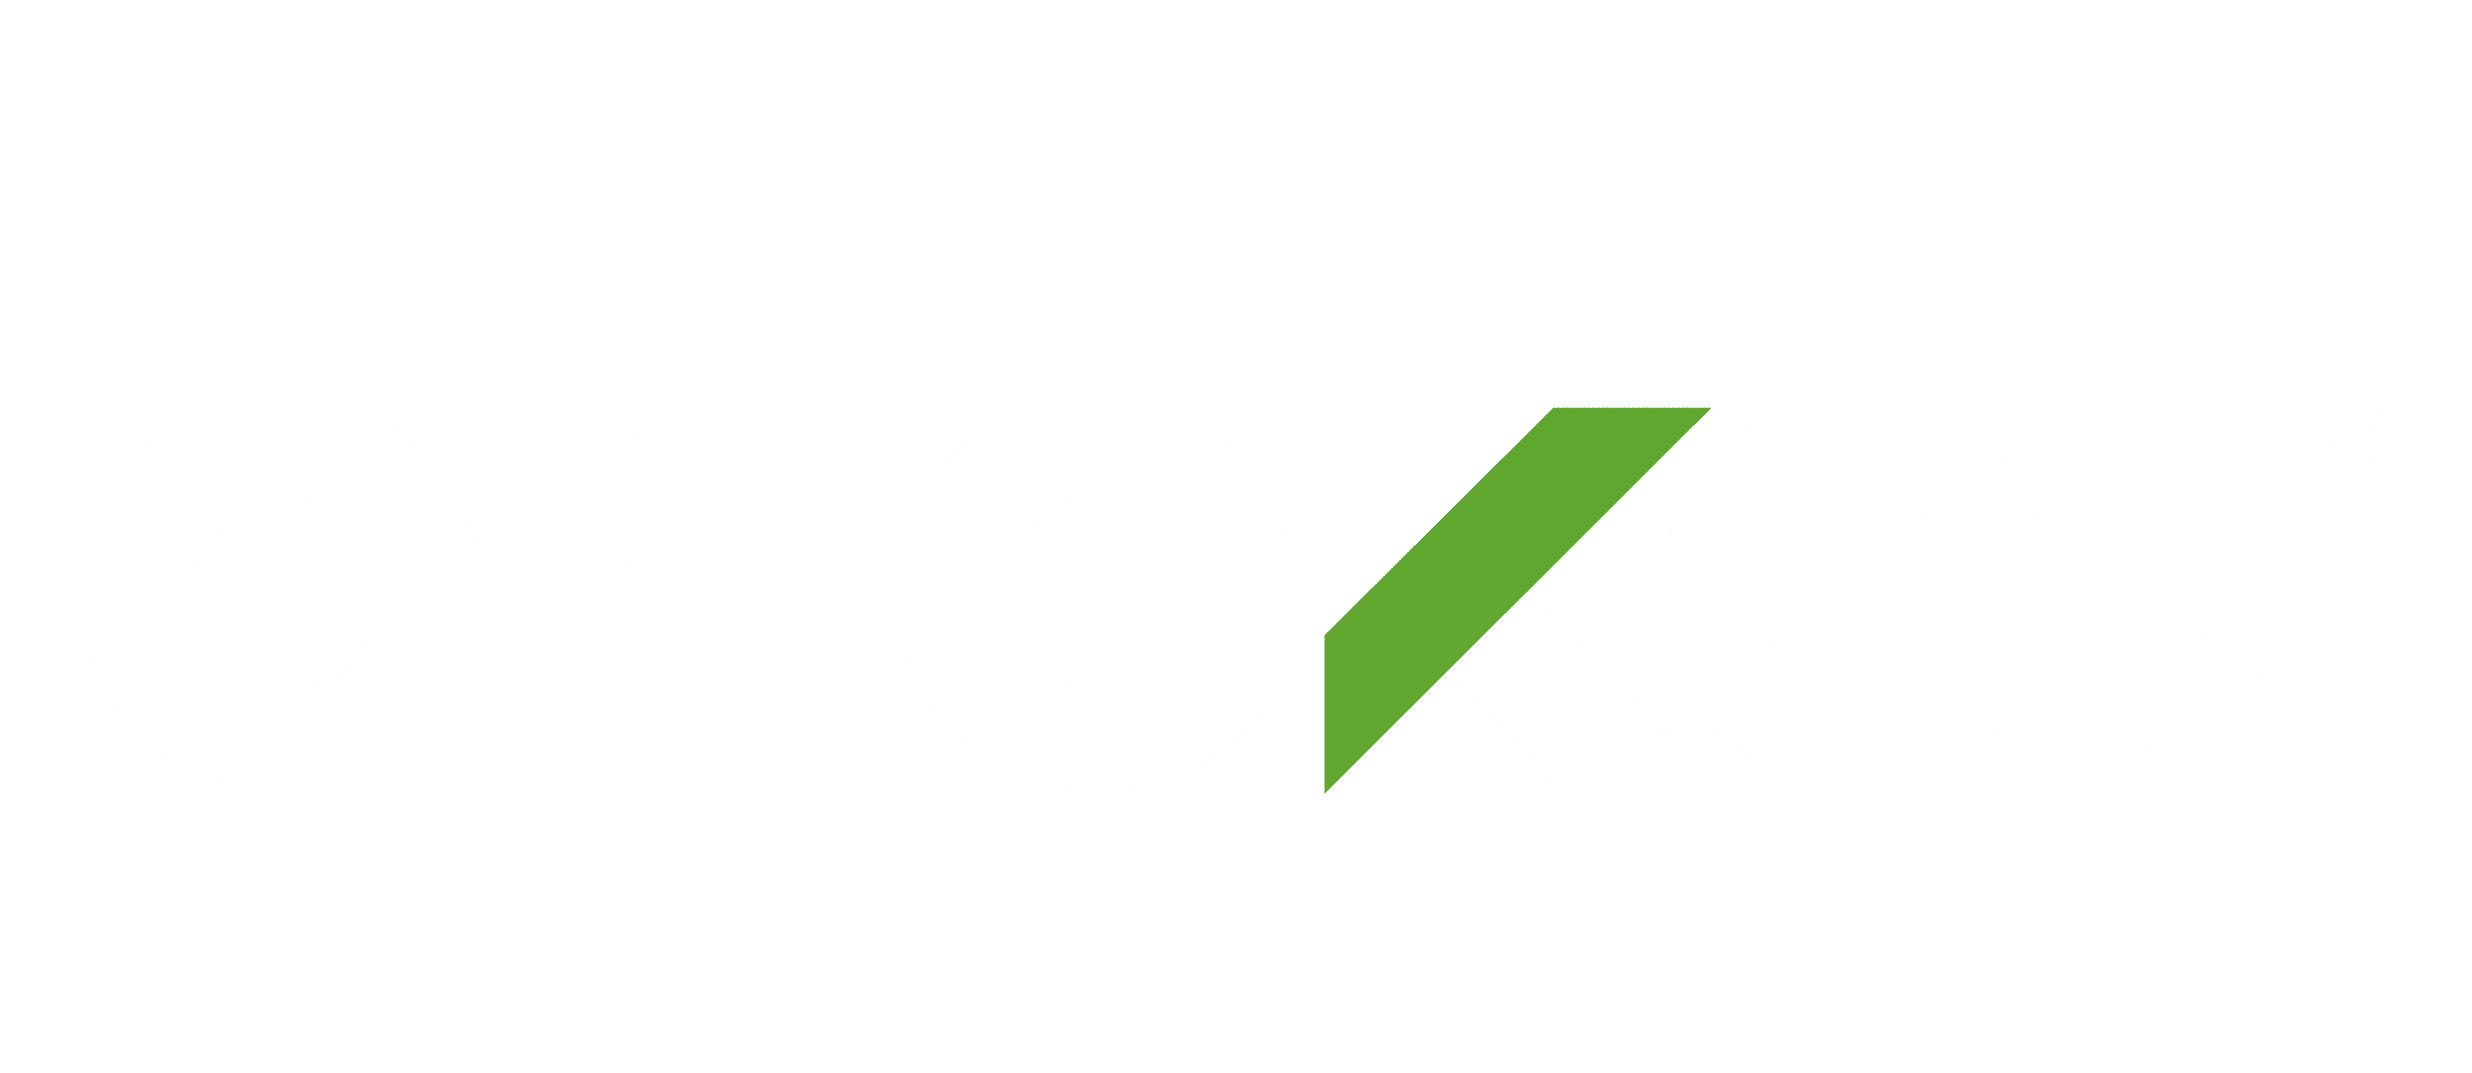 Logo Cricket Wireless